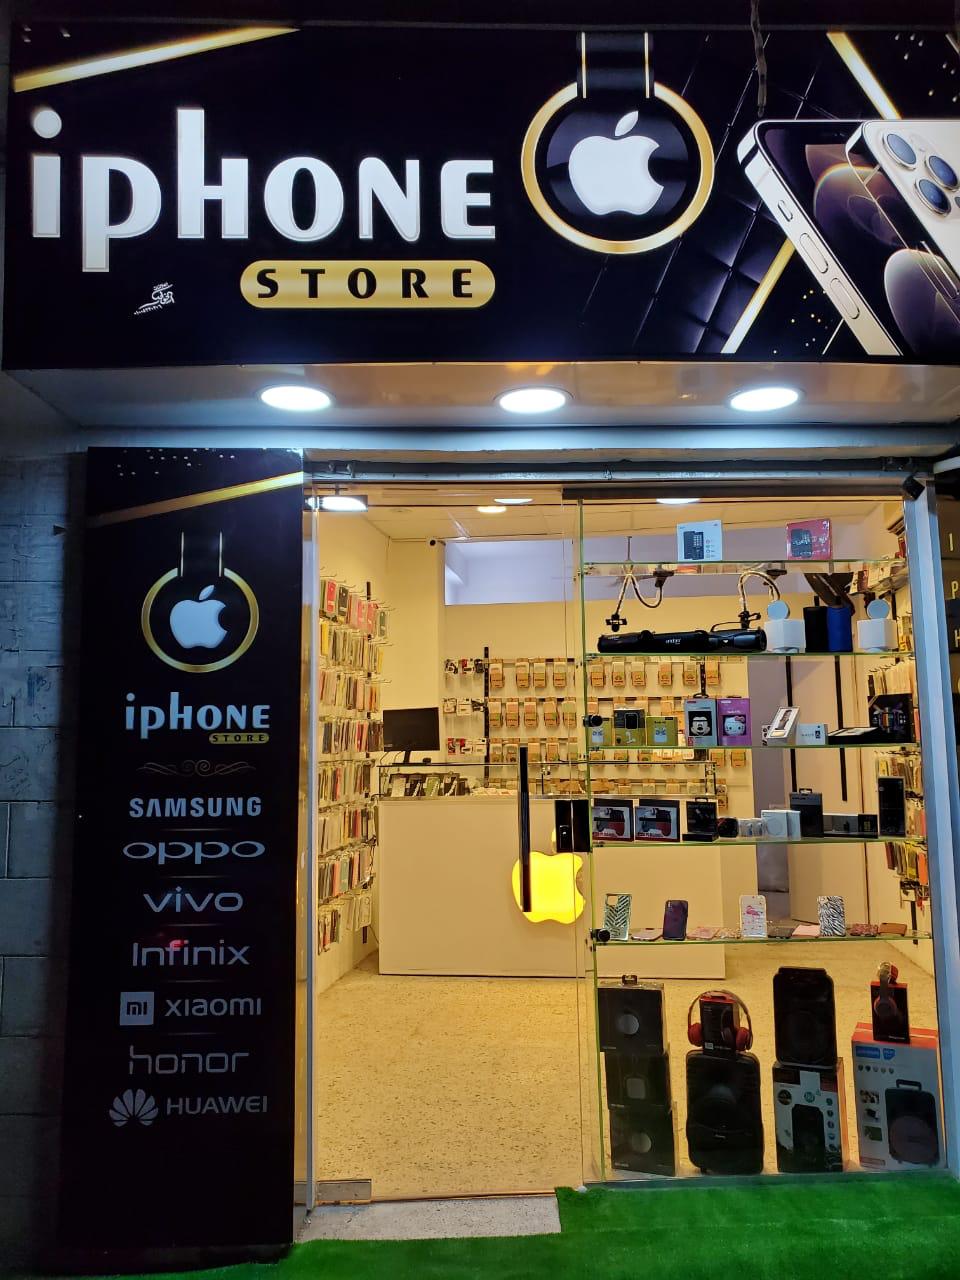 Iphone store